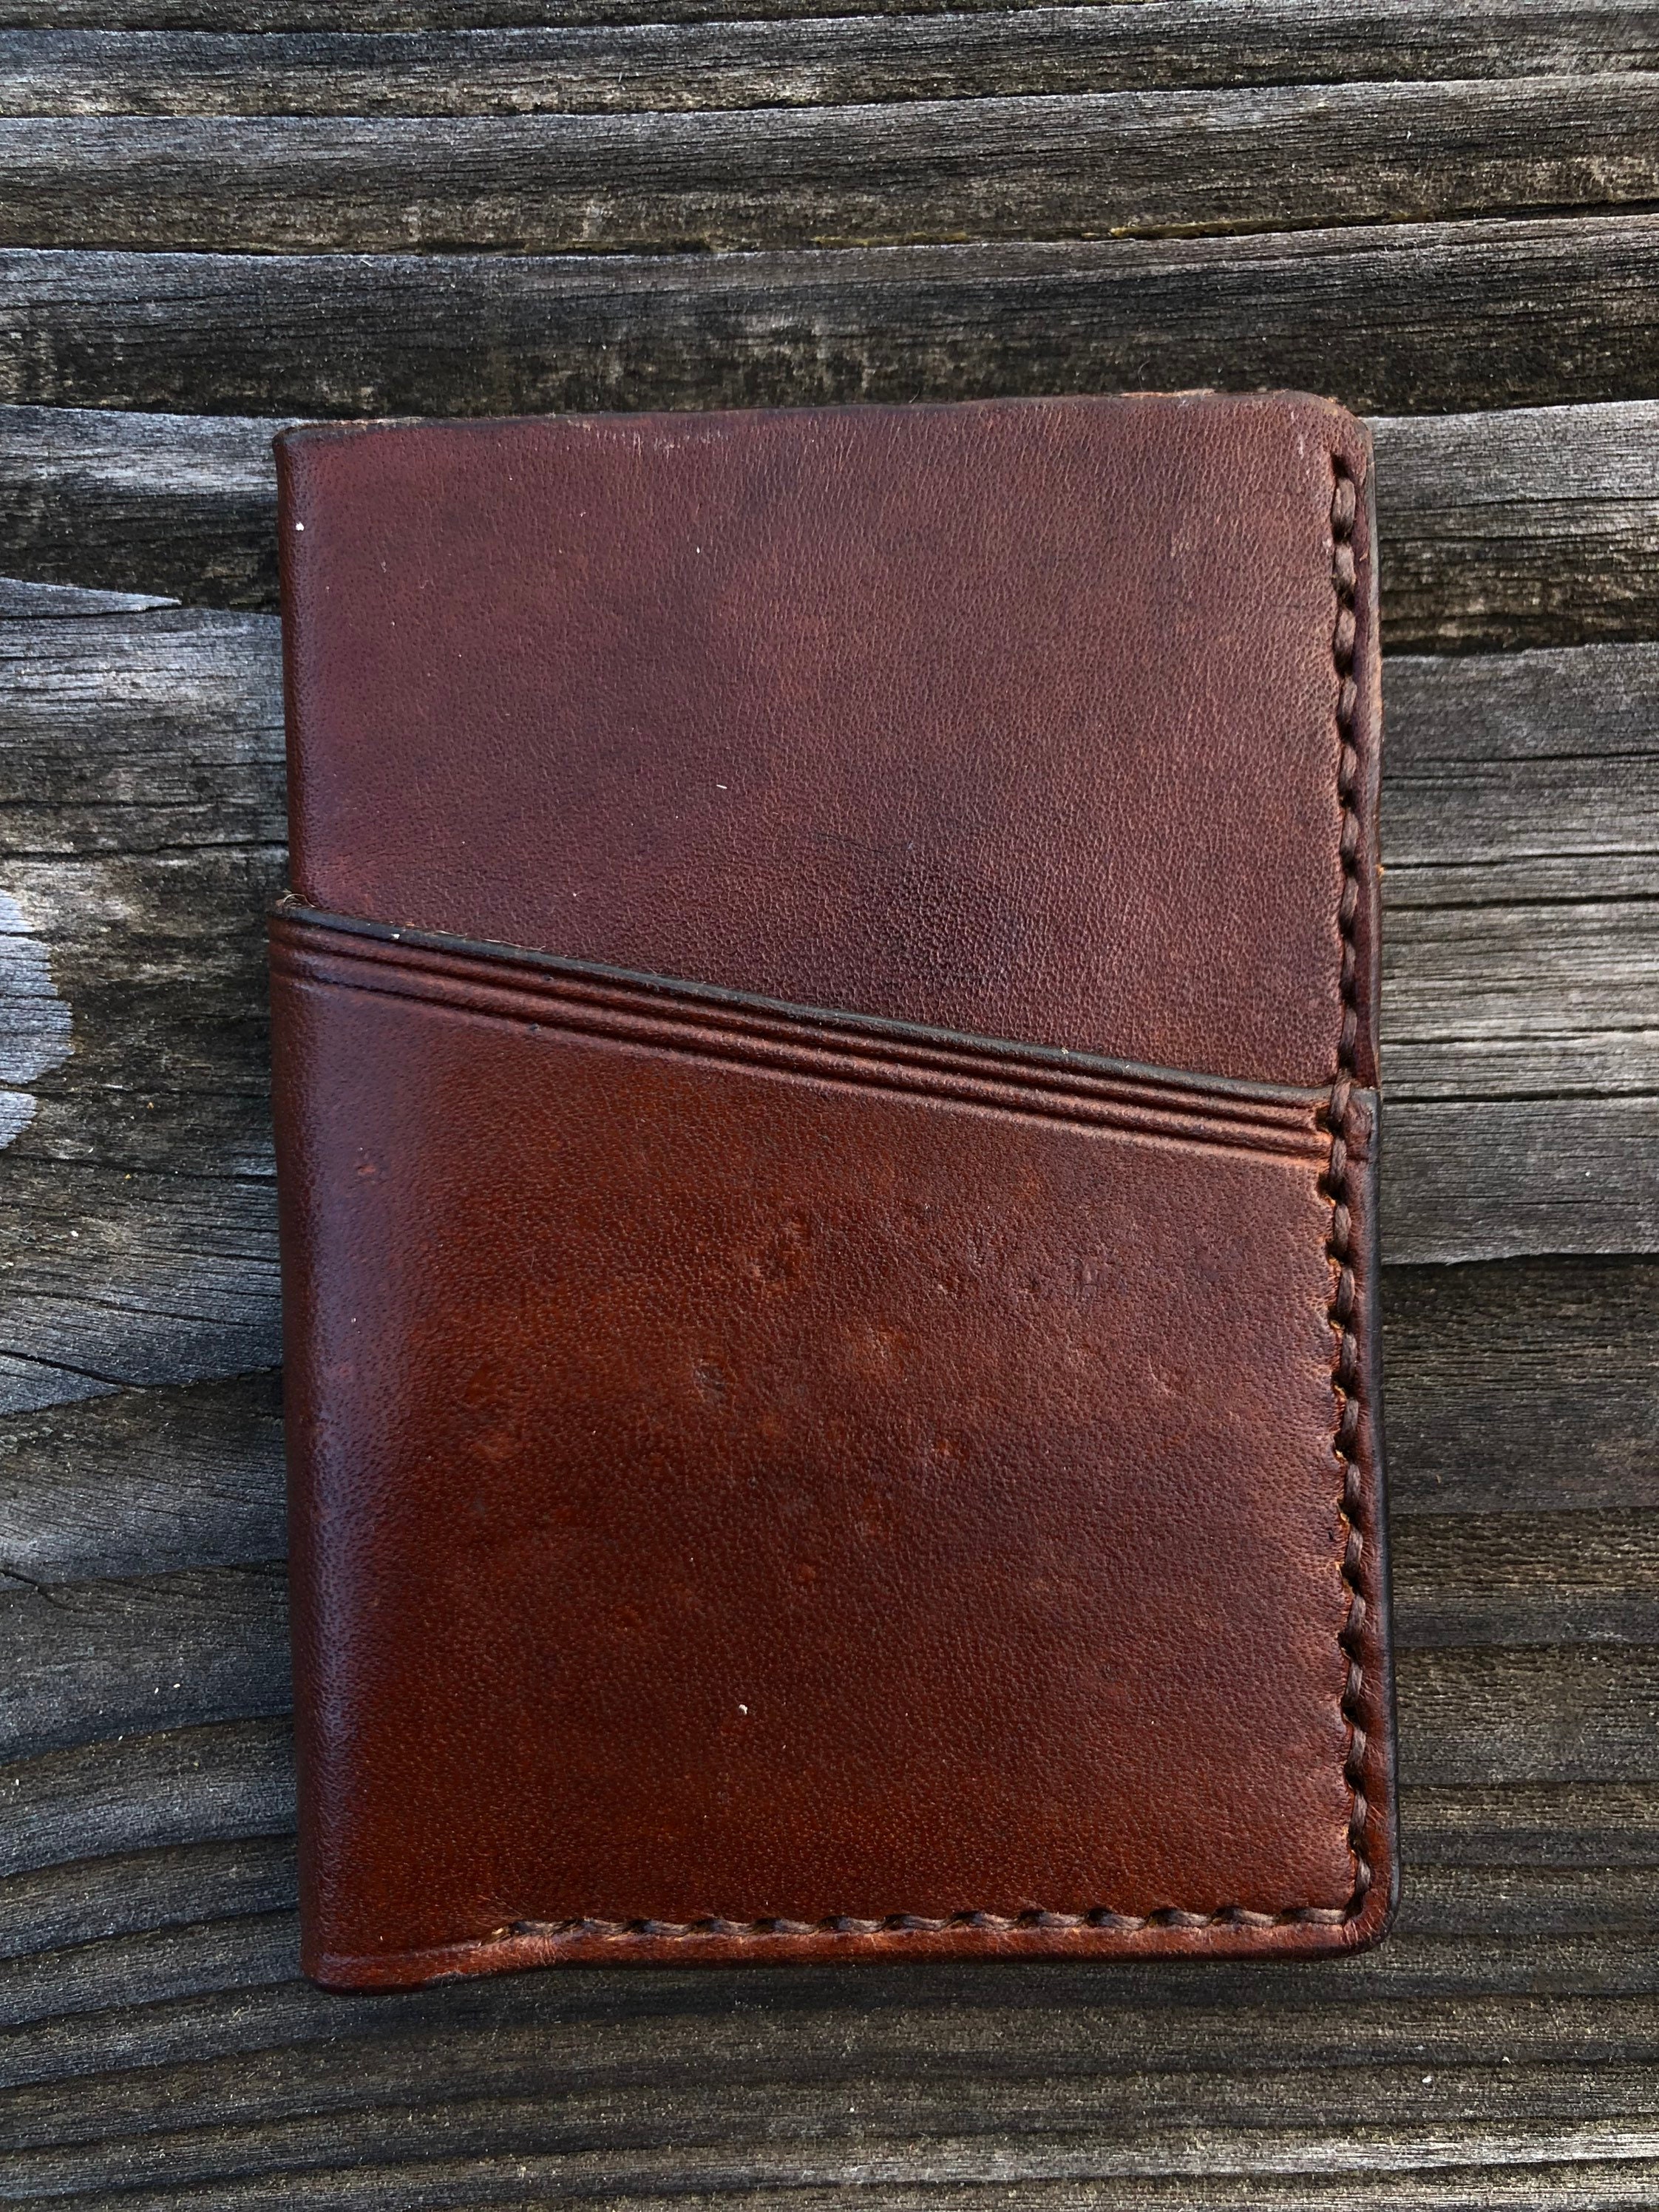 Mini Stamped Leather Western Wallet Black